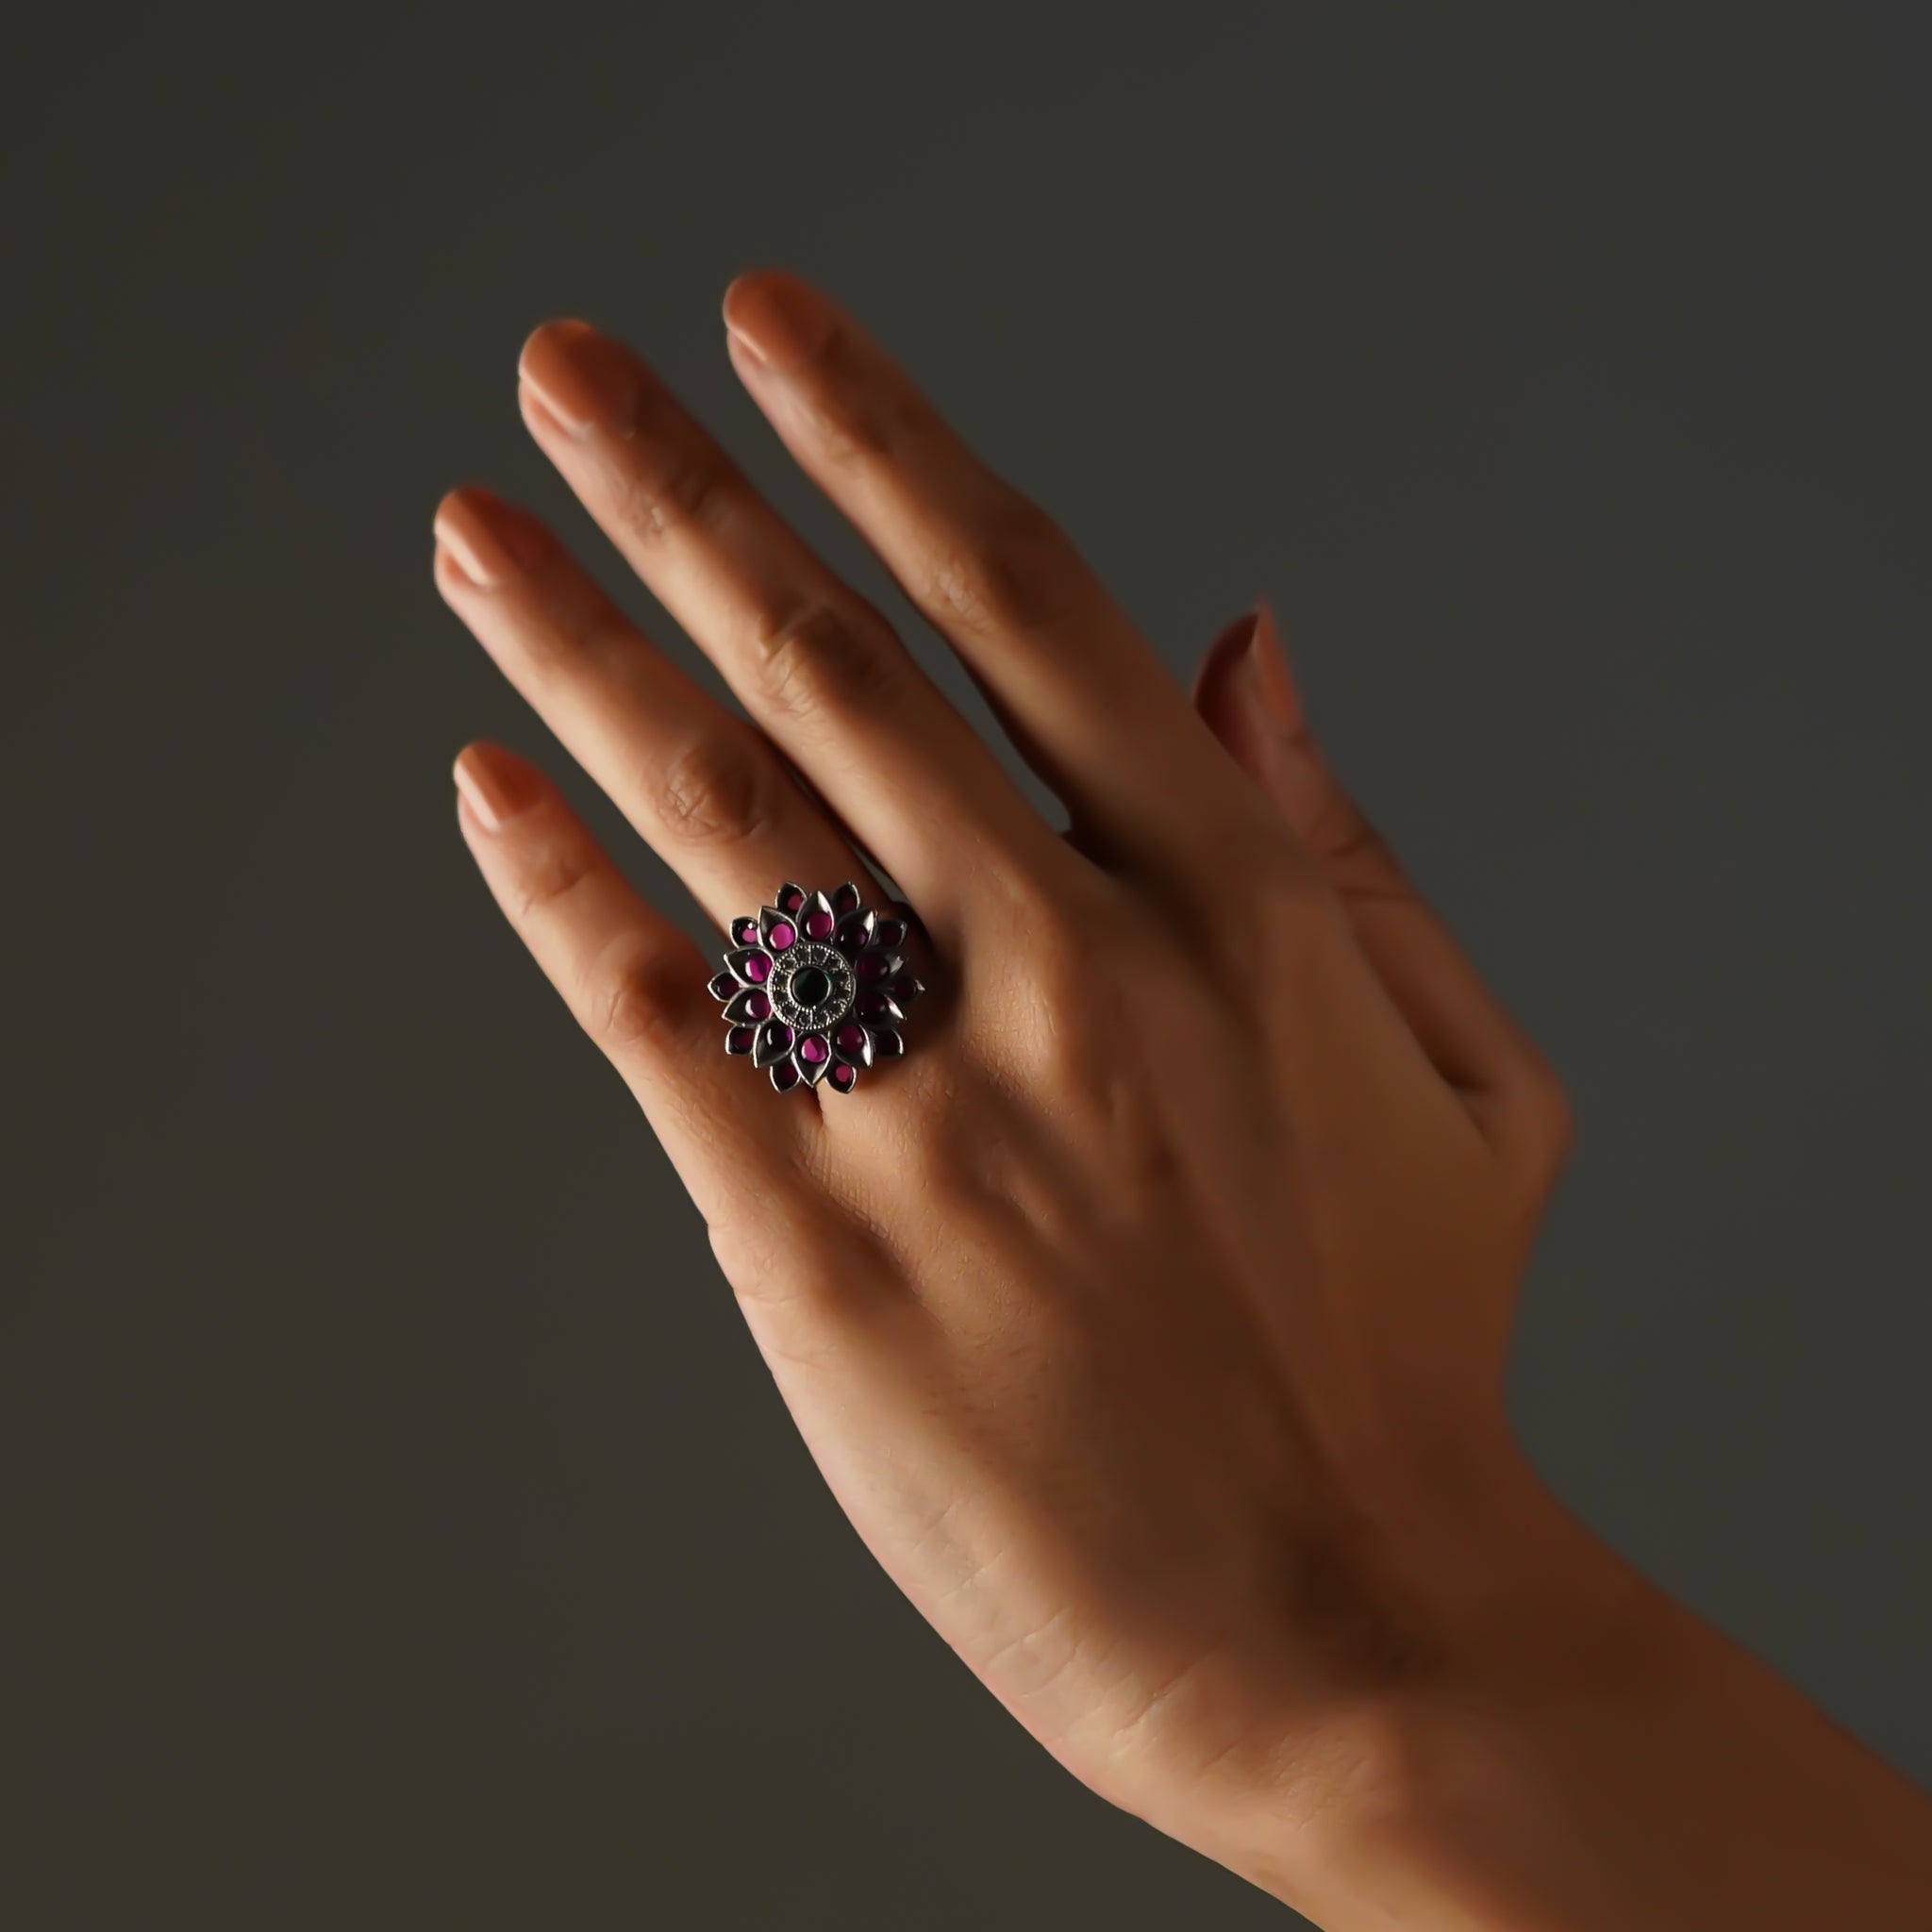 Amoda Vartika Premium Oxidized Silver Finish Ring with Stonework